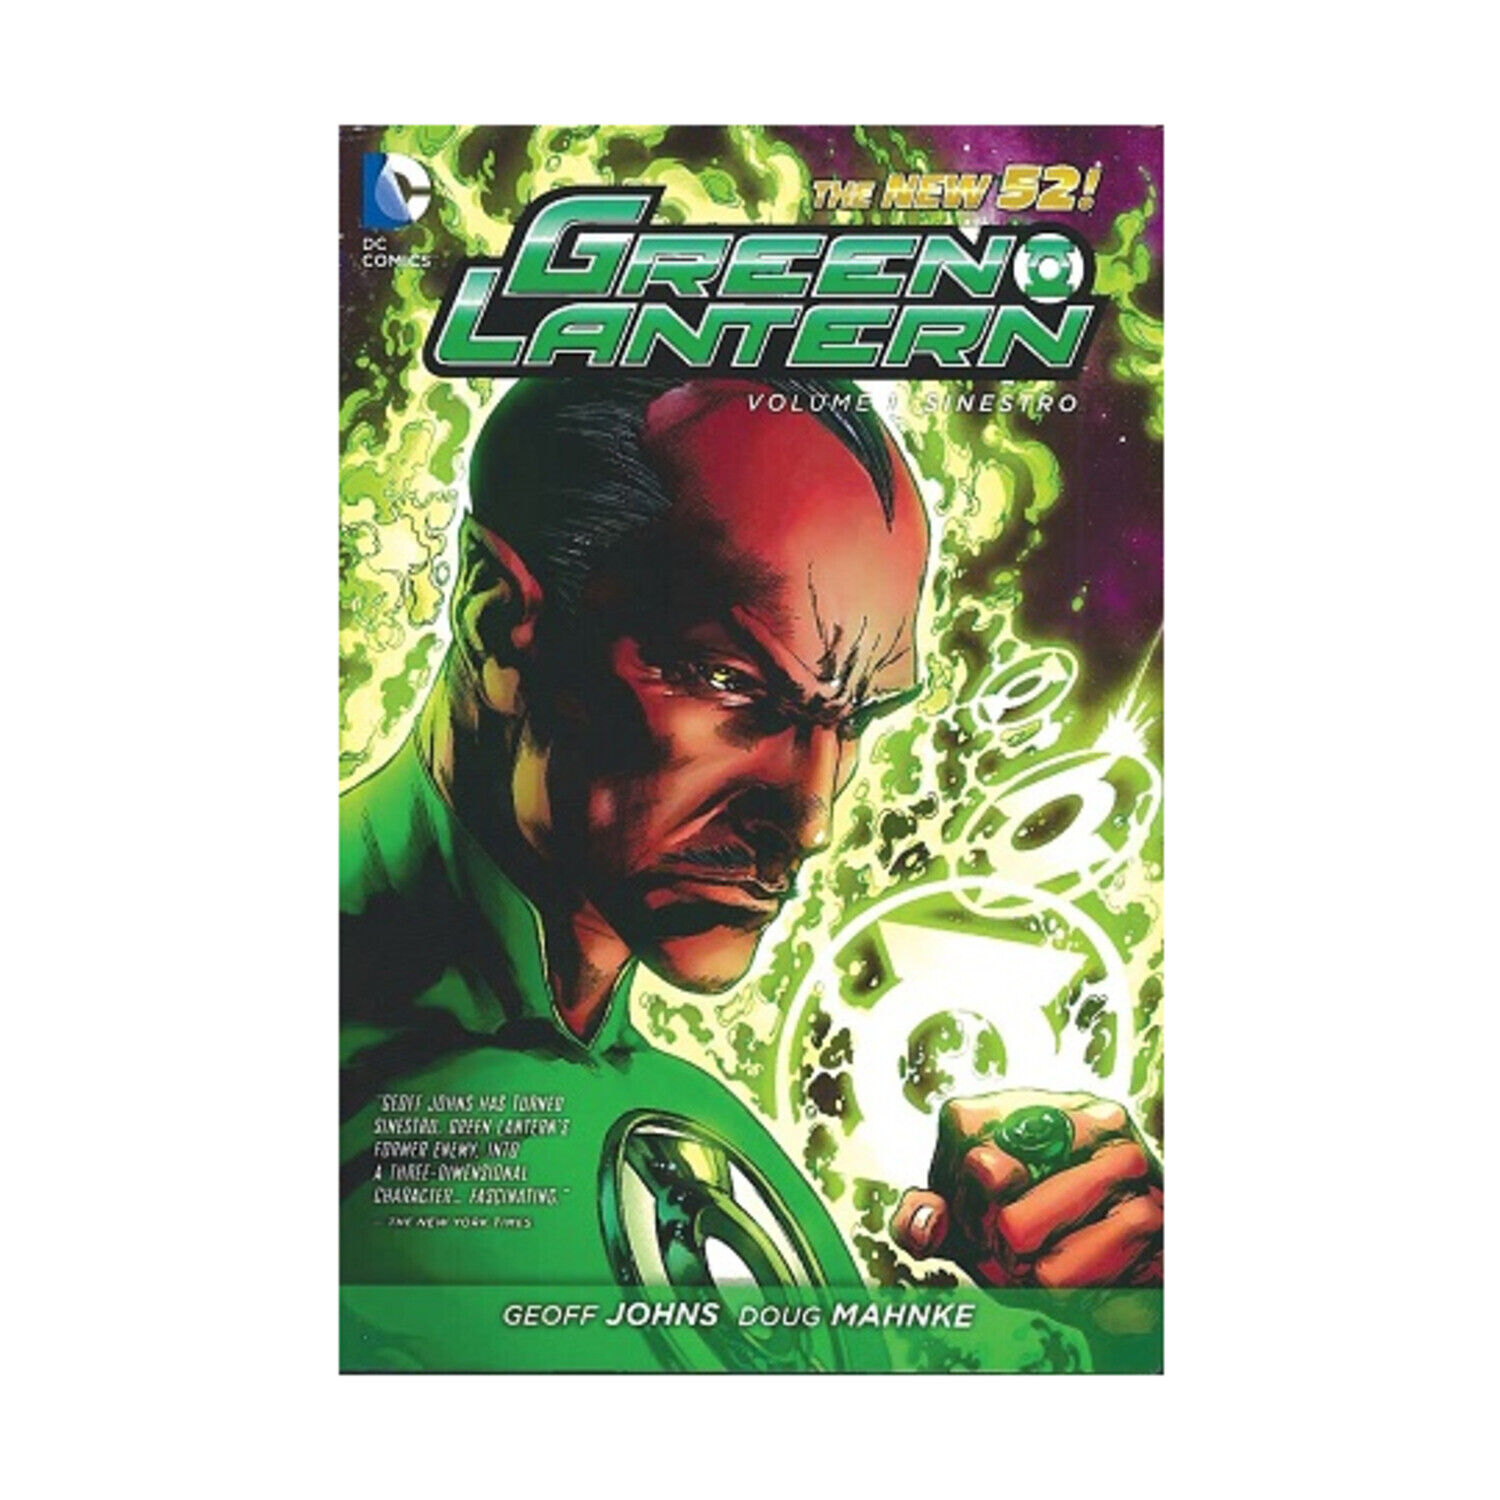 DC Graphic Novel Green Lantern Vol. 1 - Sinestro NM